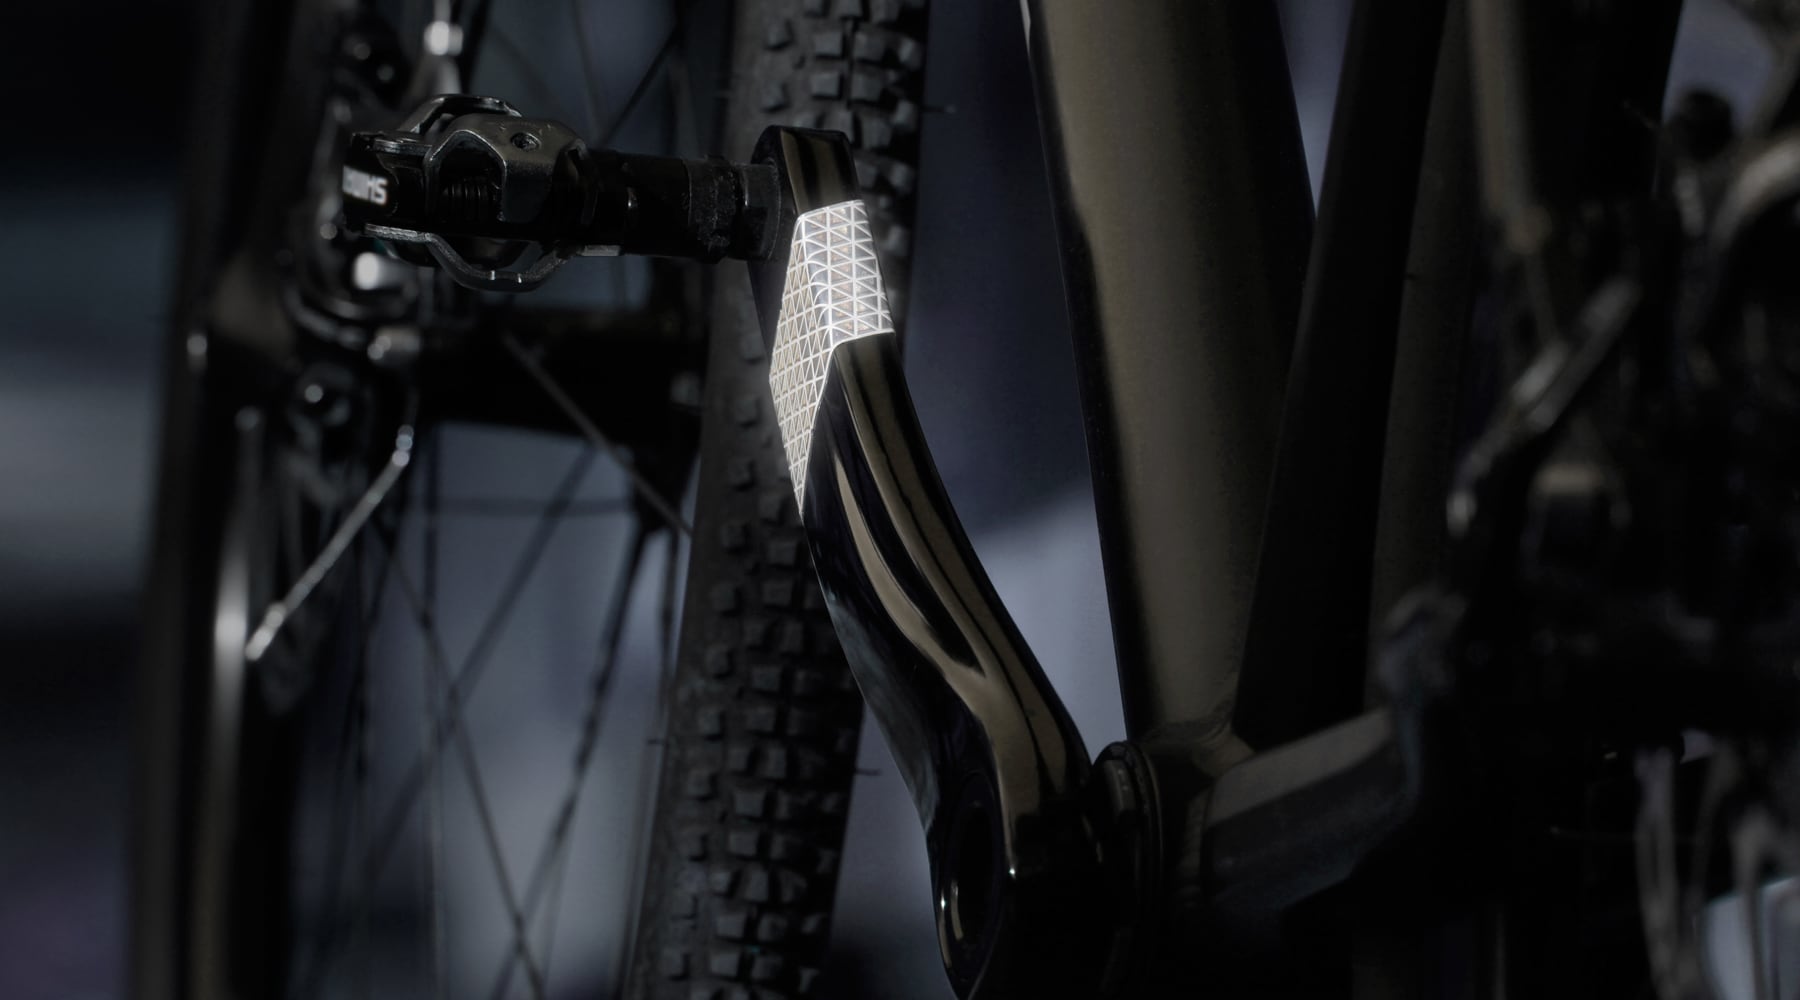 FLECTR VORTEX is the first bike crank reflector